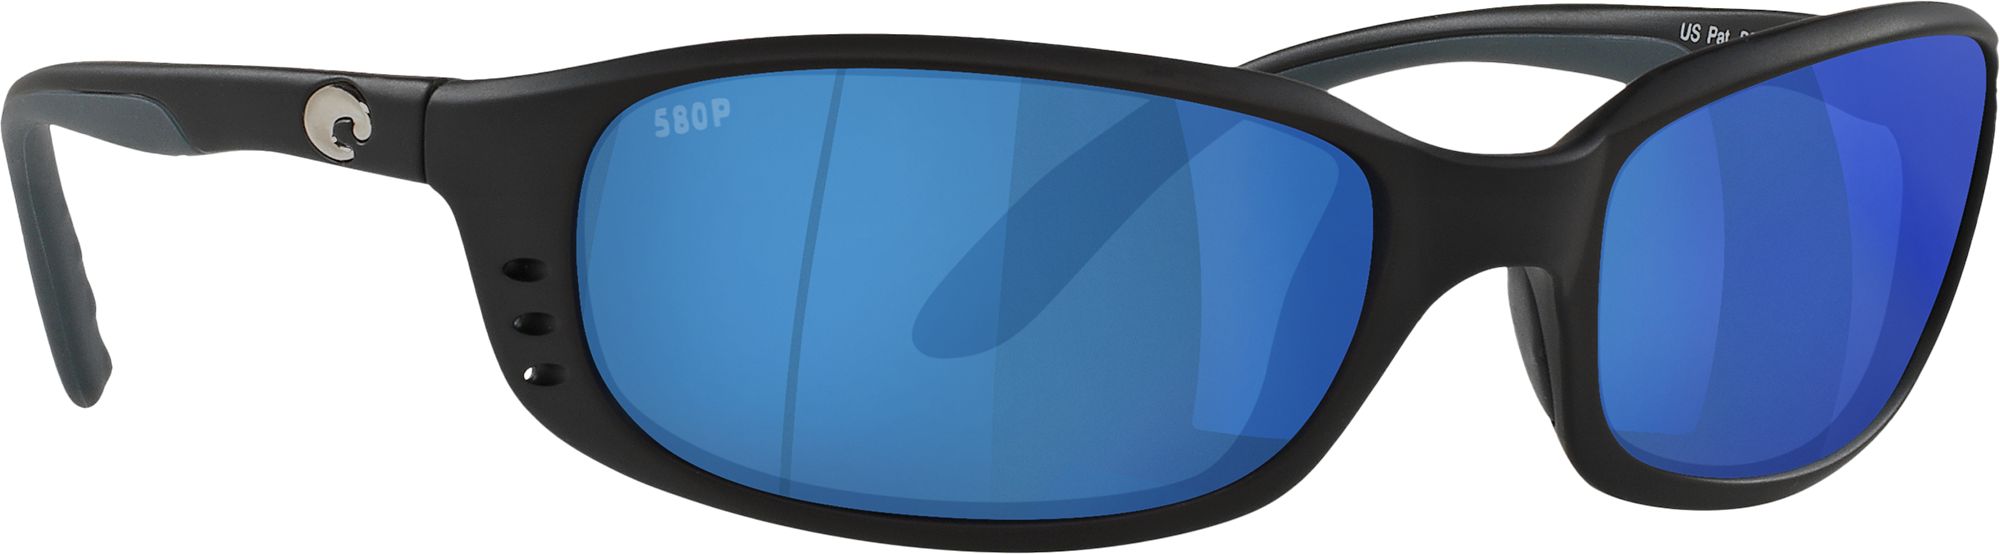 Dick's Sporting Goods Costa Del Mar Men's Brine 580P Polarized Sunglasses